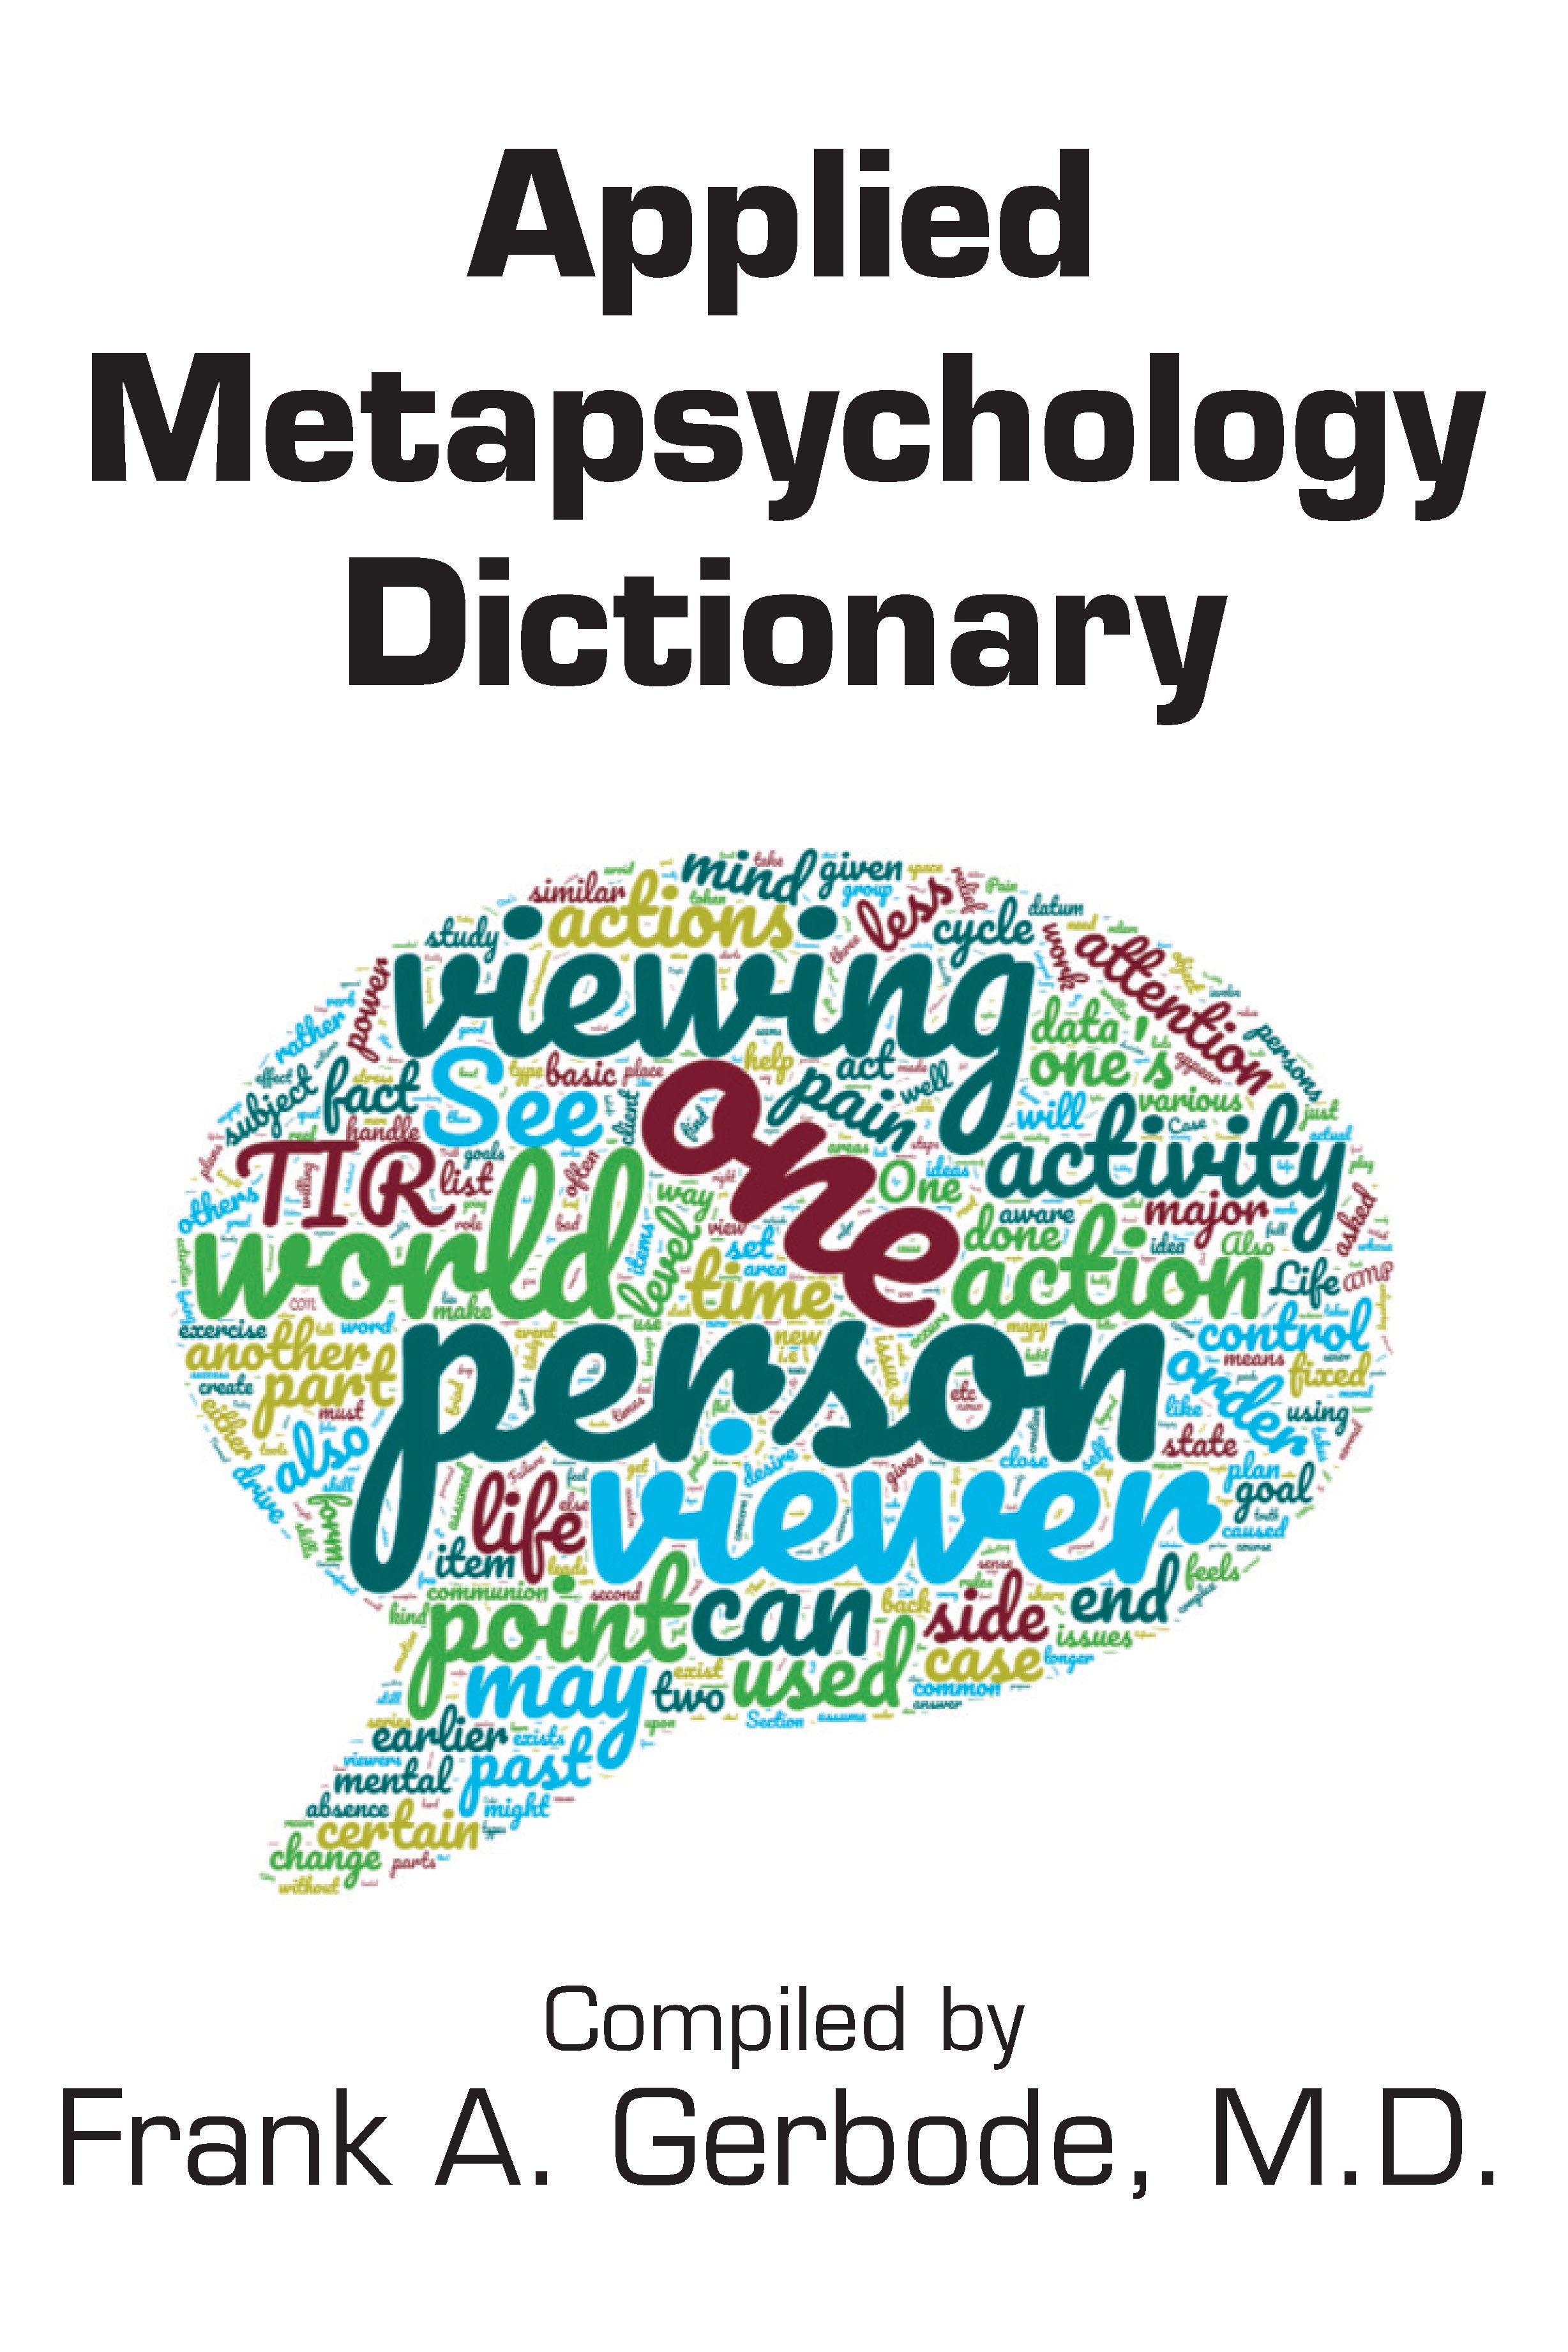 Applied Metapsychology Dictionary, Frank A. Gerbode, M.D.